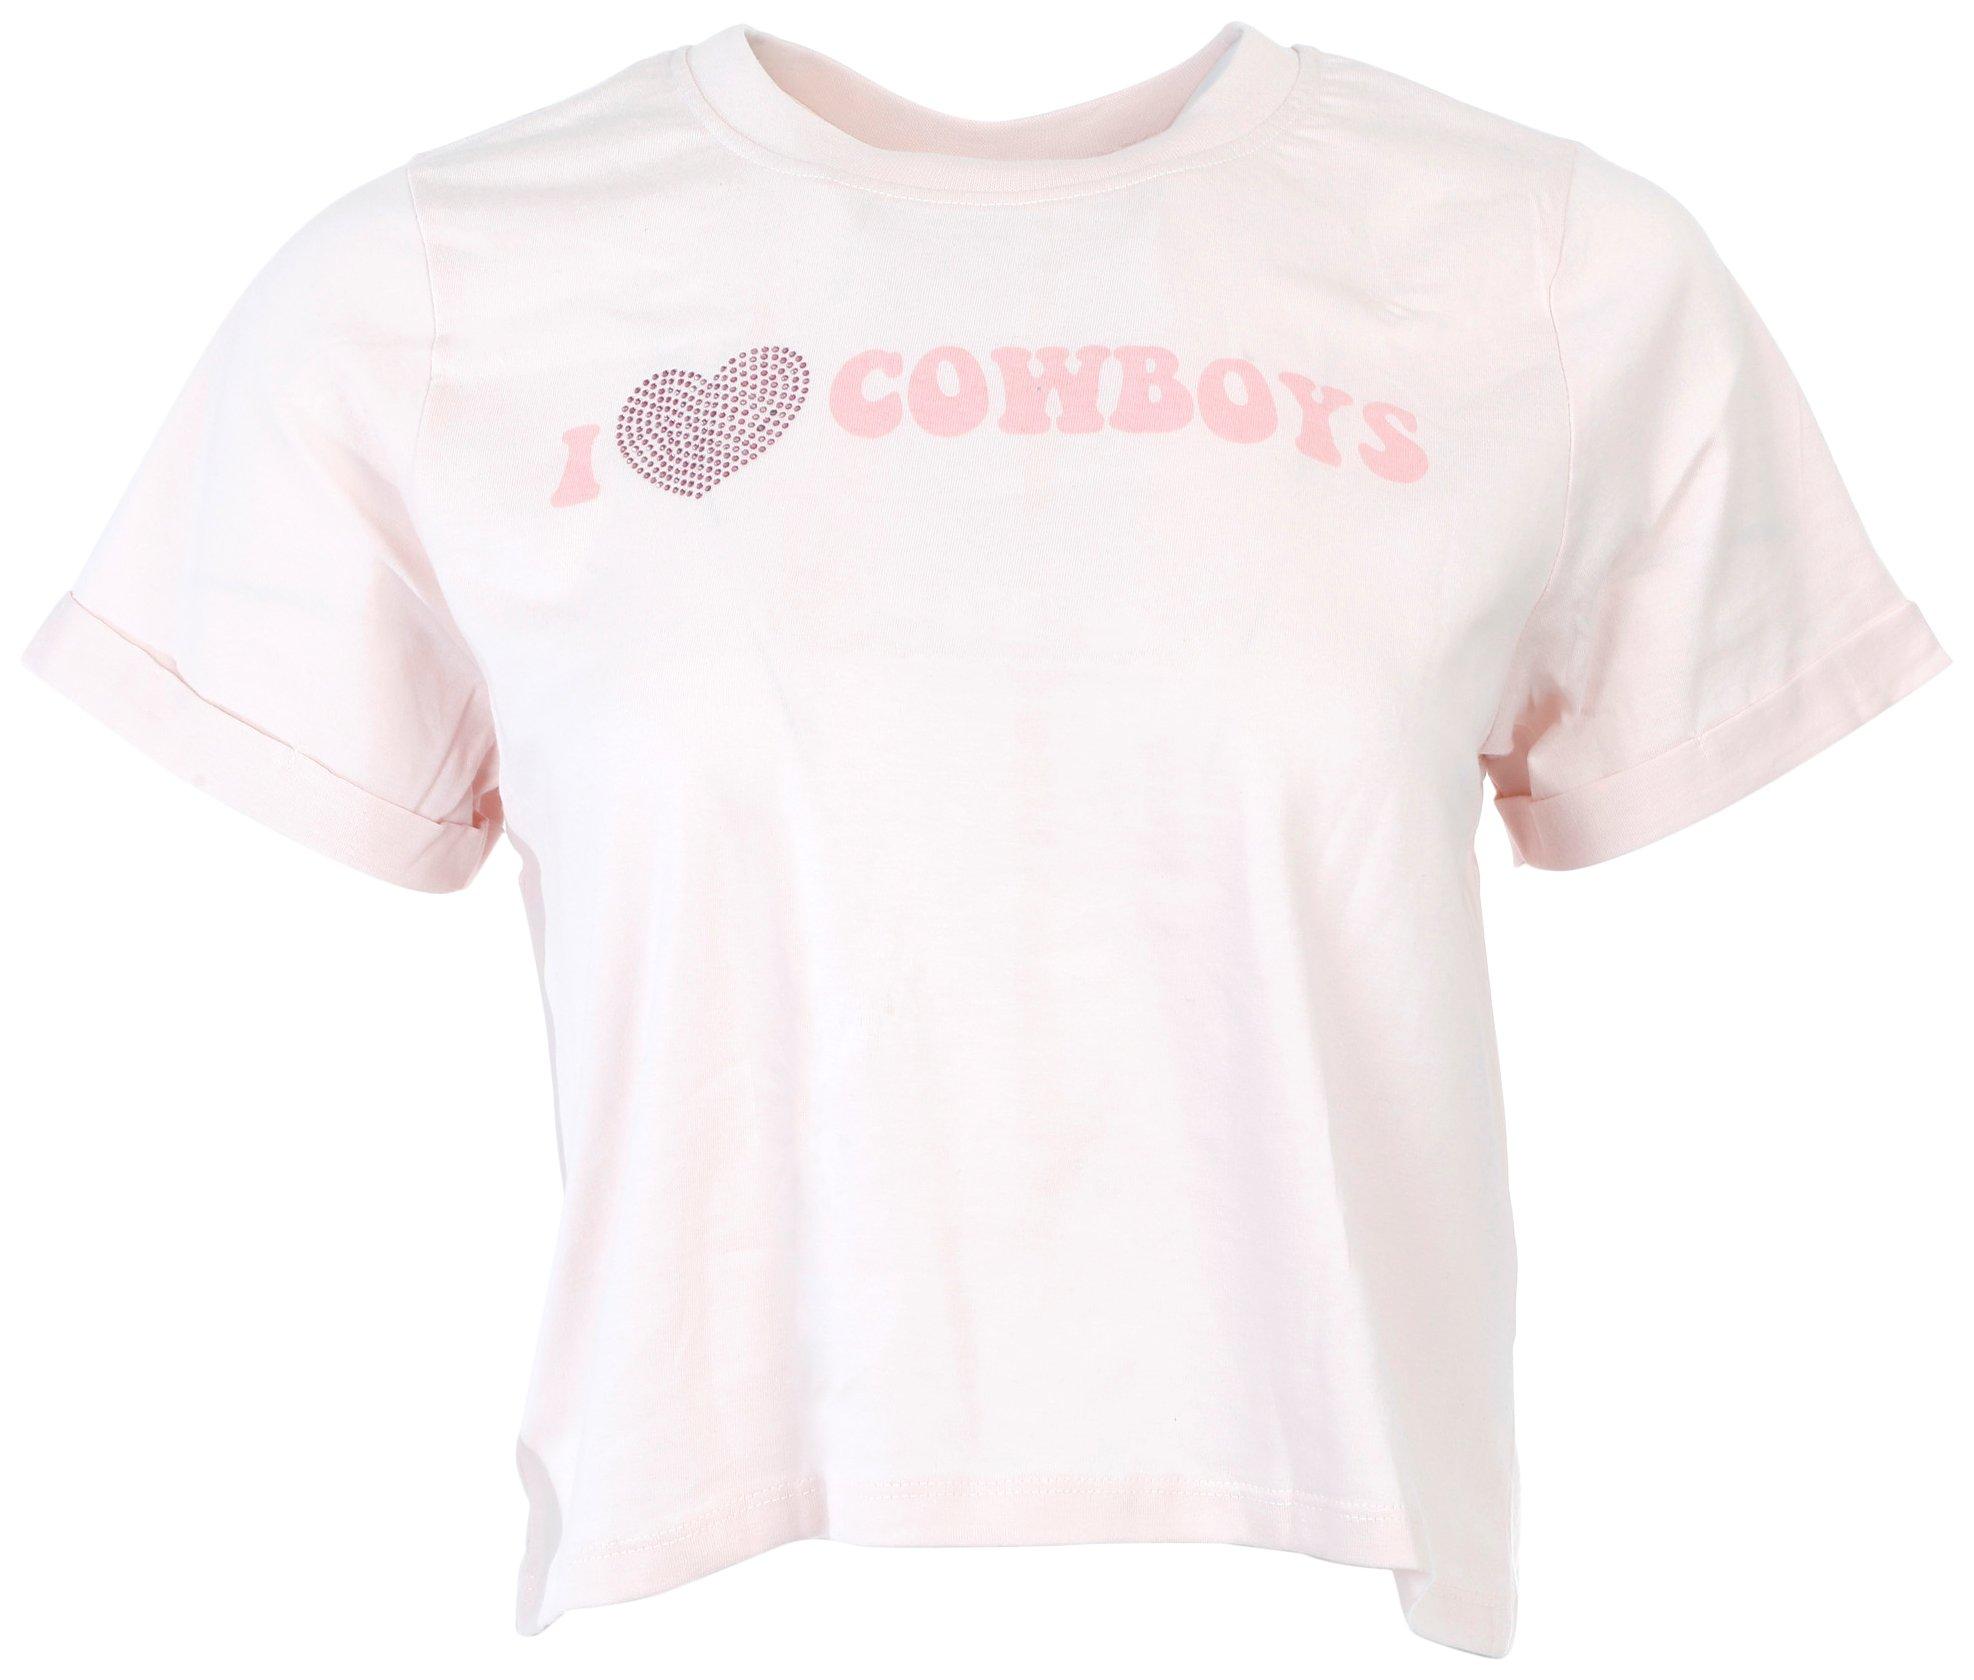 Coastal Dreamer I Love Cowboys T-shirt